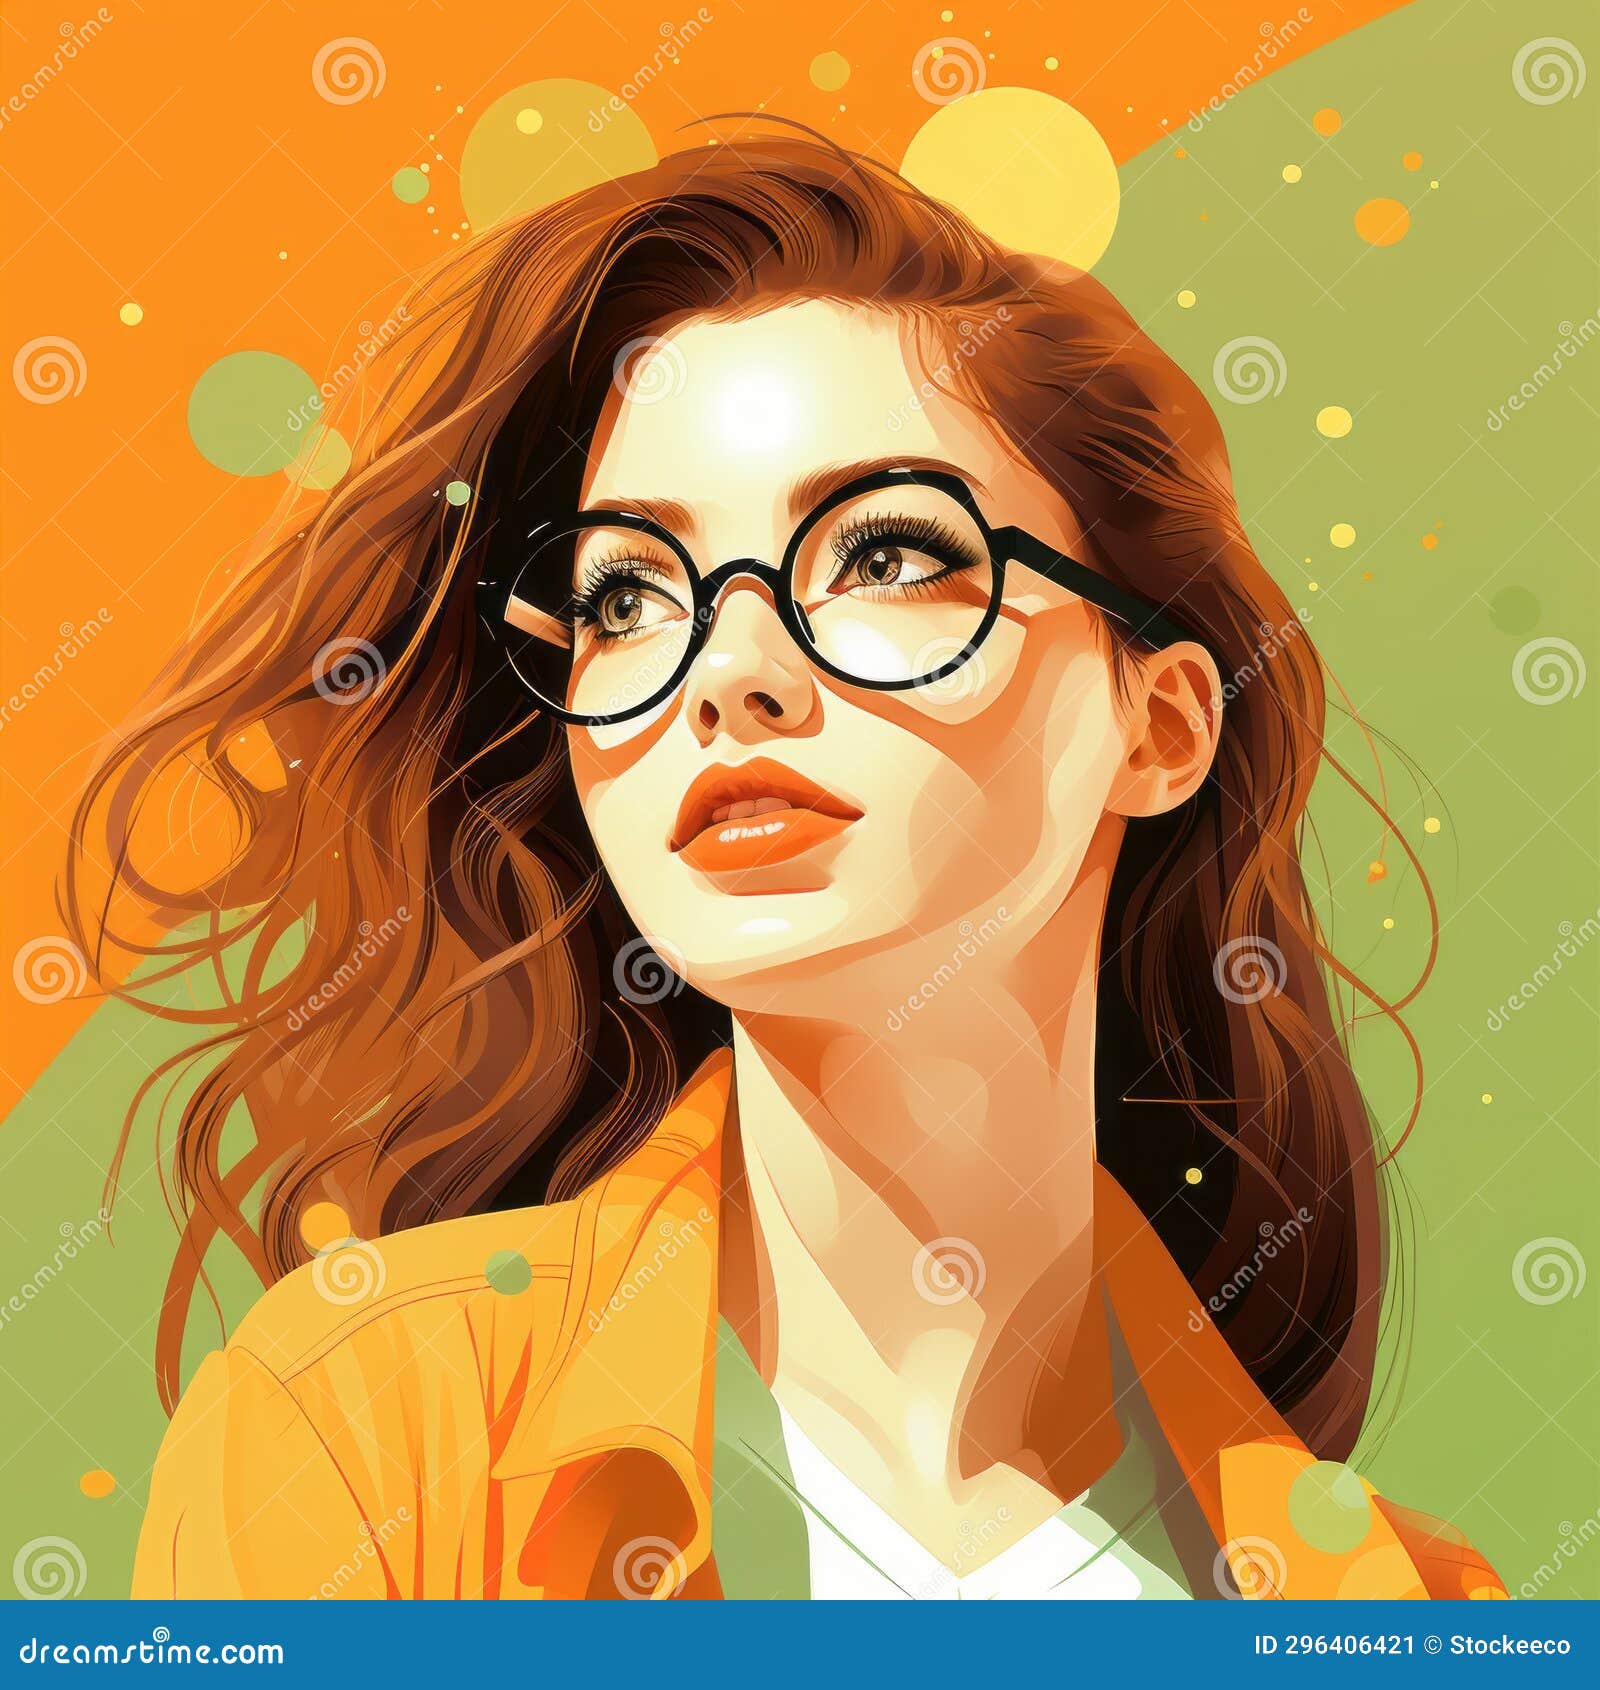 Vibrant Comics: Illustration of a Dreamy Woman in Glasses and Orange ...